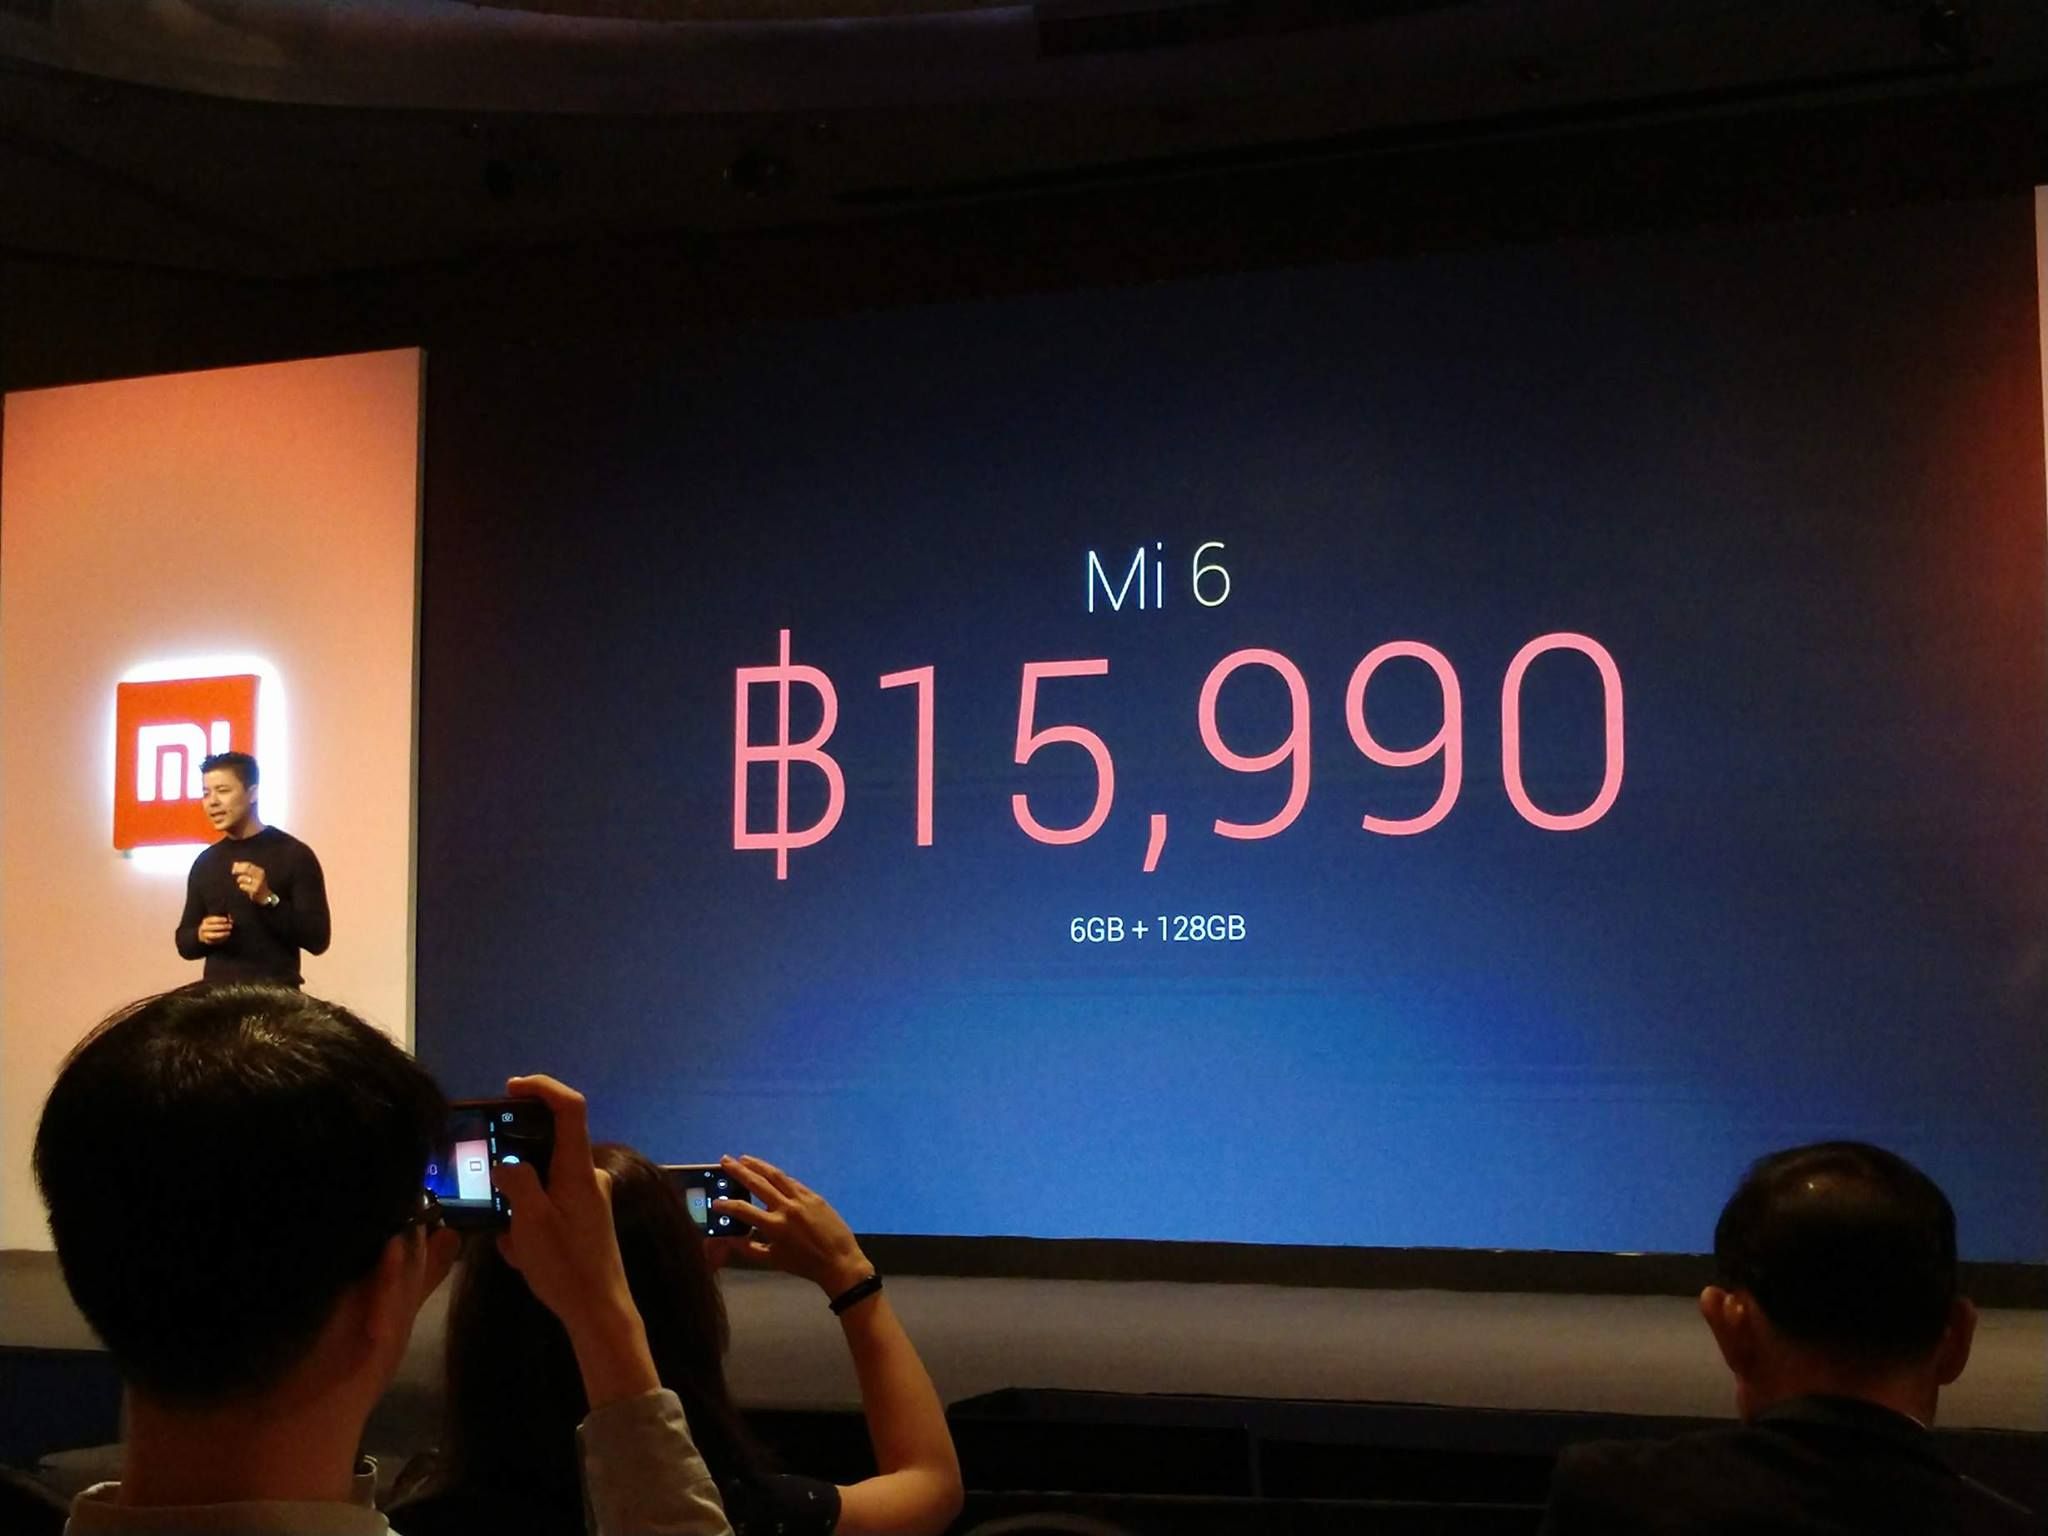 Xiaomi นำเรือธงบุกไทยด้วย Mi 6 ราคาเริ่ม 13,790 บาท, Redmi Note 4 ราคา 6,790 บาท, พร้อมขายผลิตภัณฑ์อื่นๆ ด้วย